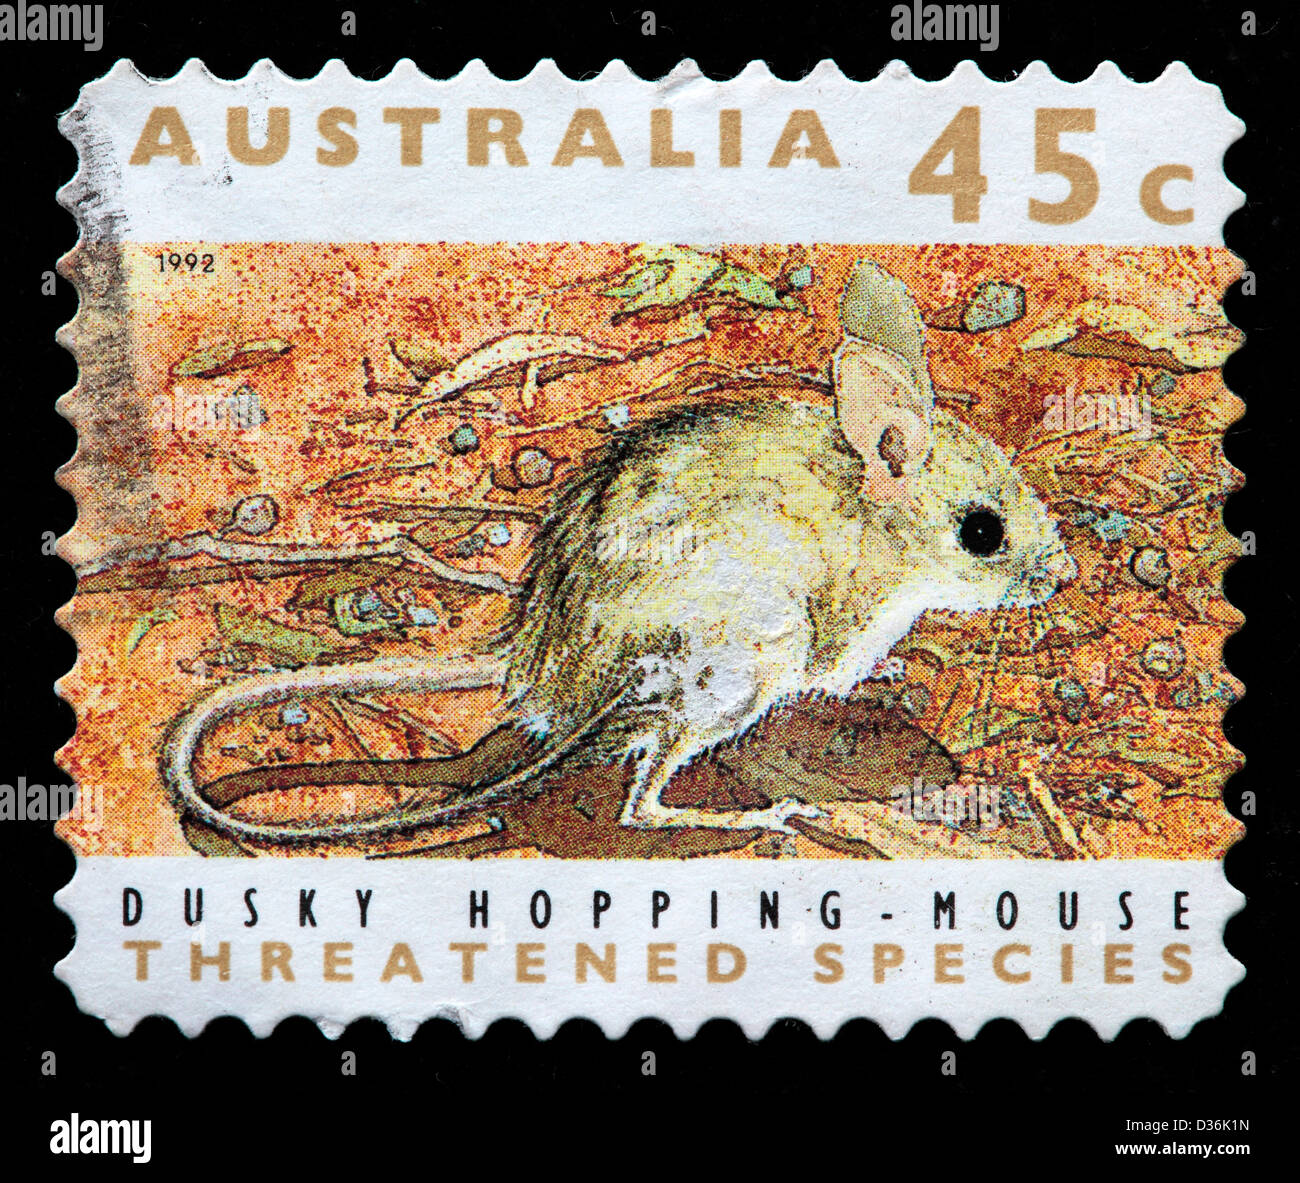 Dusky hopping-mouse, postage stamp, Australia, 1992 Stock Photo